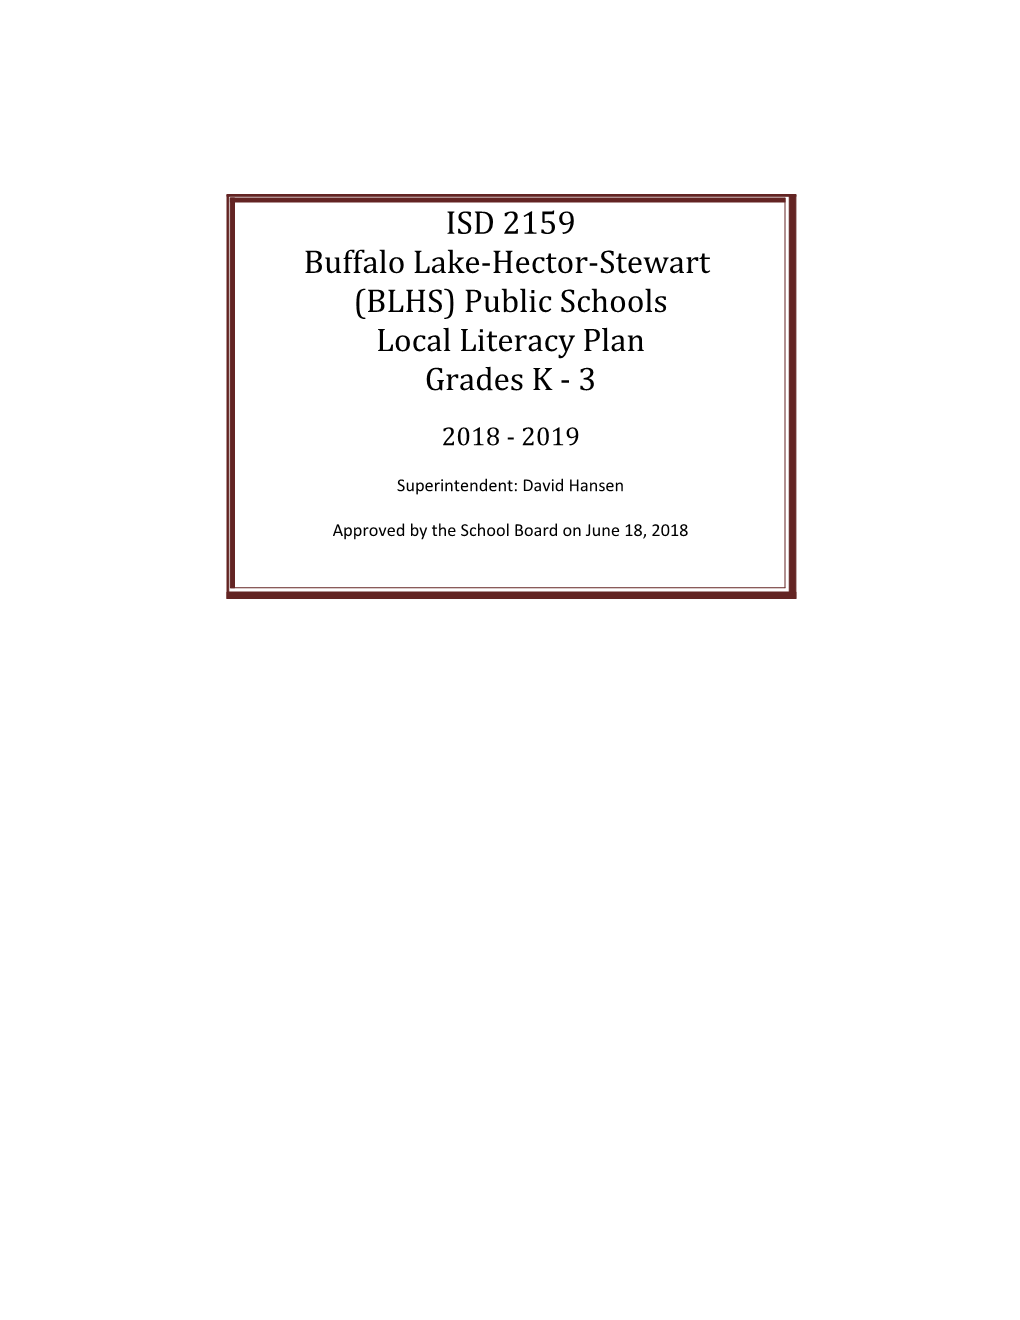 ISD 2159, BLHS Public Schools Local Literacy Plan